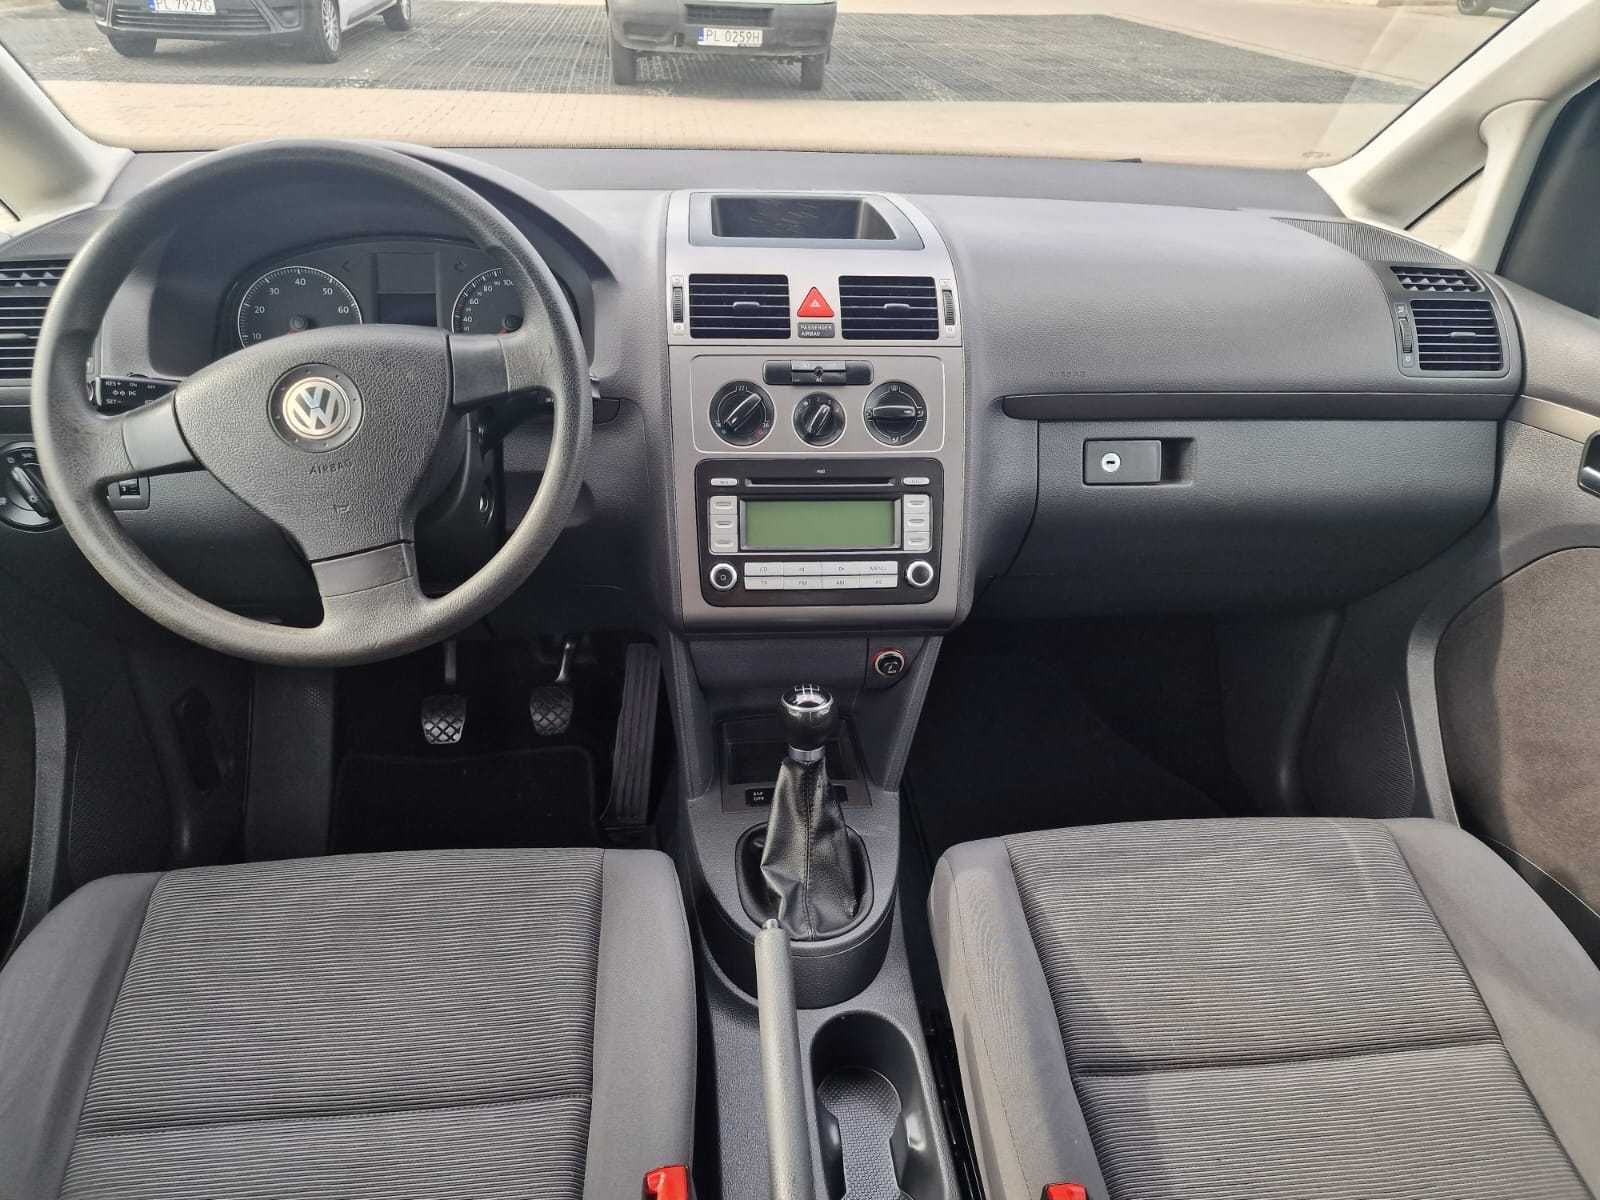 VW Touran benzyna 1.6 MPI 102, 2007r Lift 7 os. Alu-felgi Bezwypadkowy